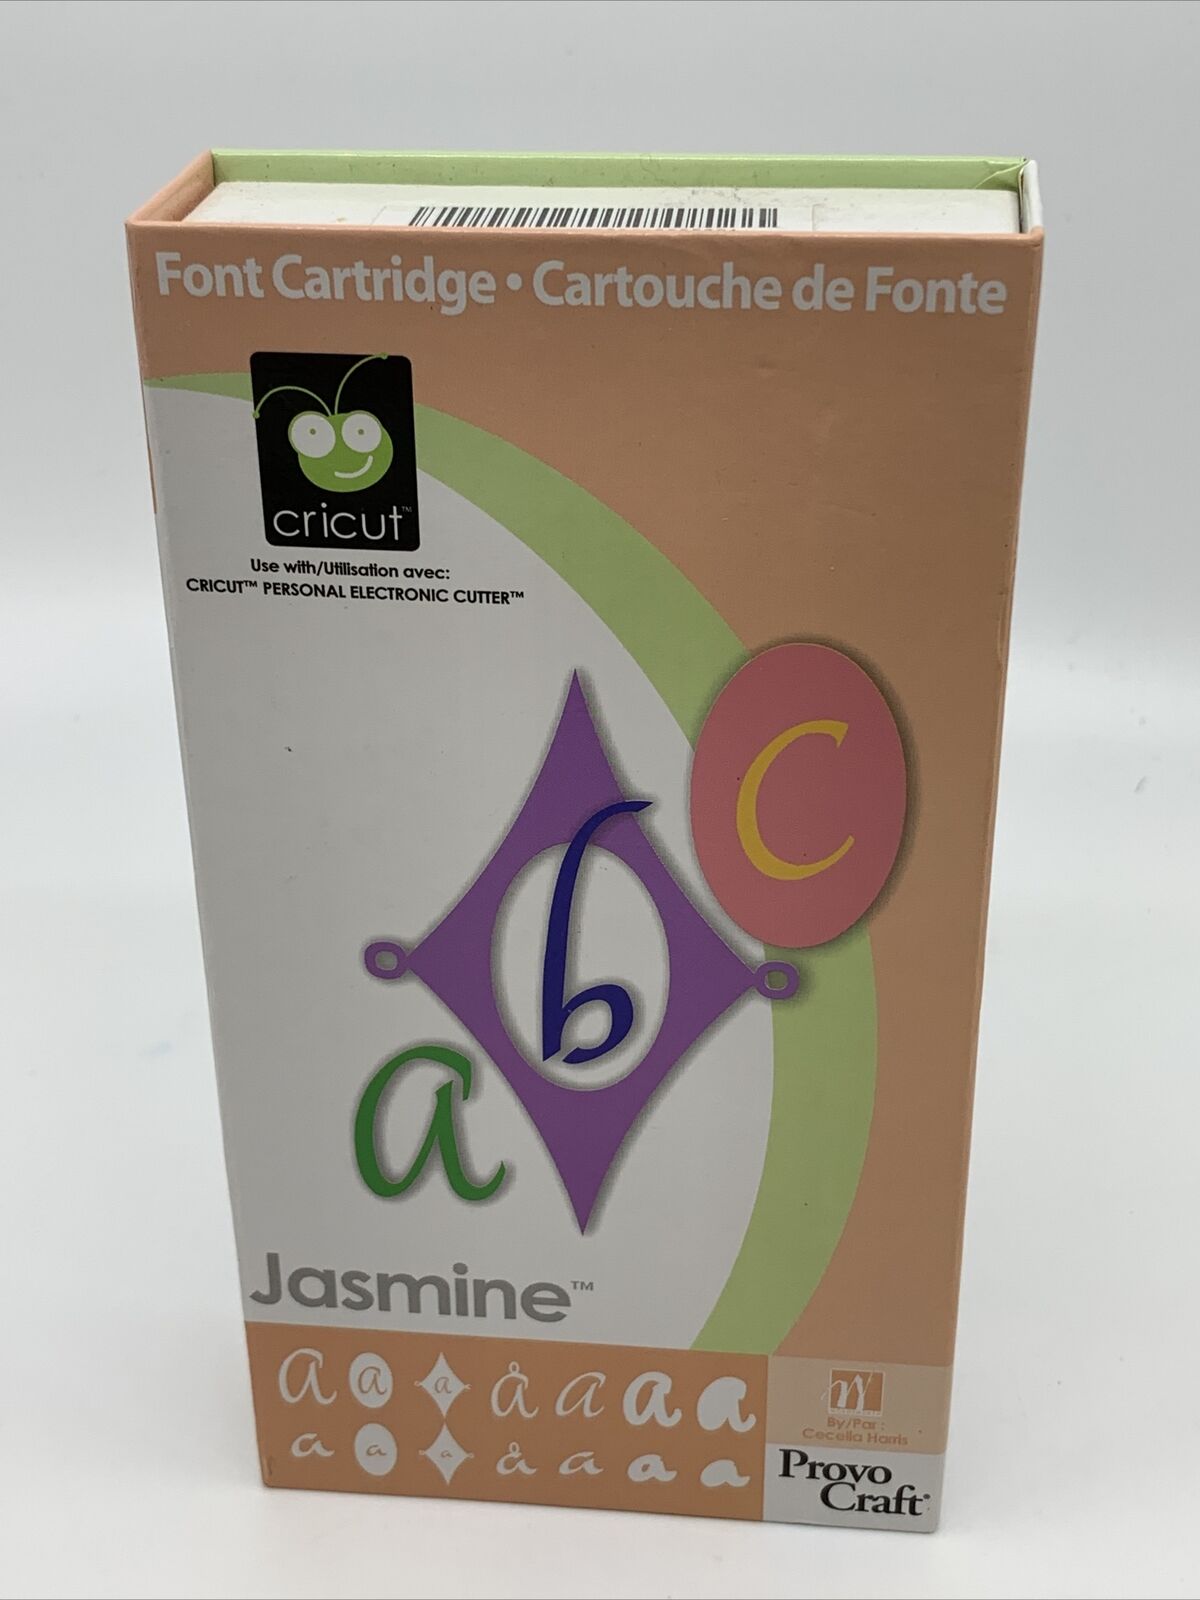 Cricut Cartridge 29-0015 "jasmine" - Link Status Unknown -